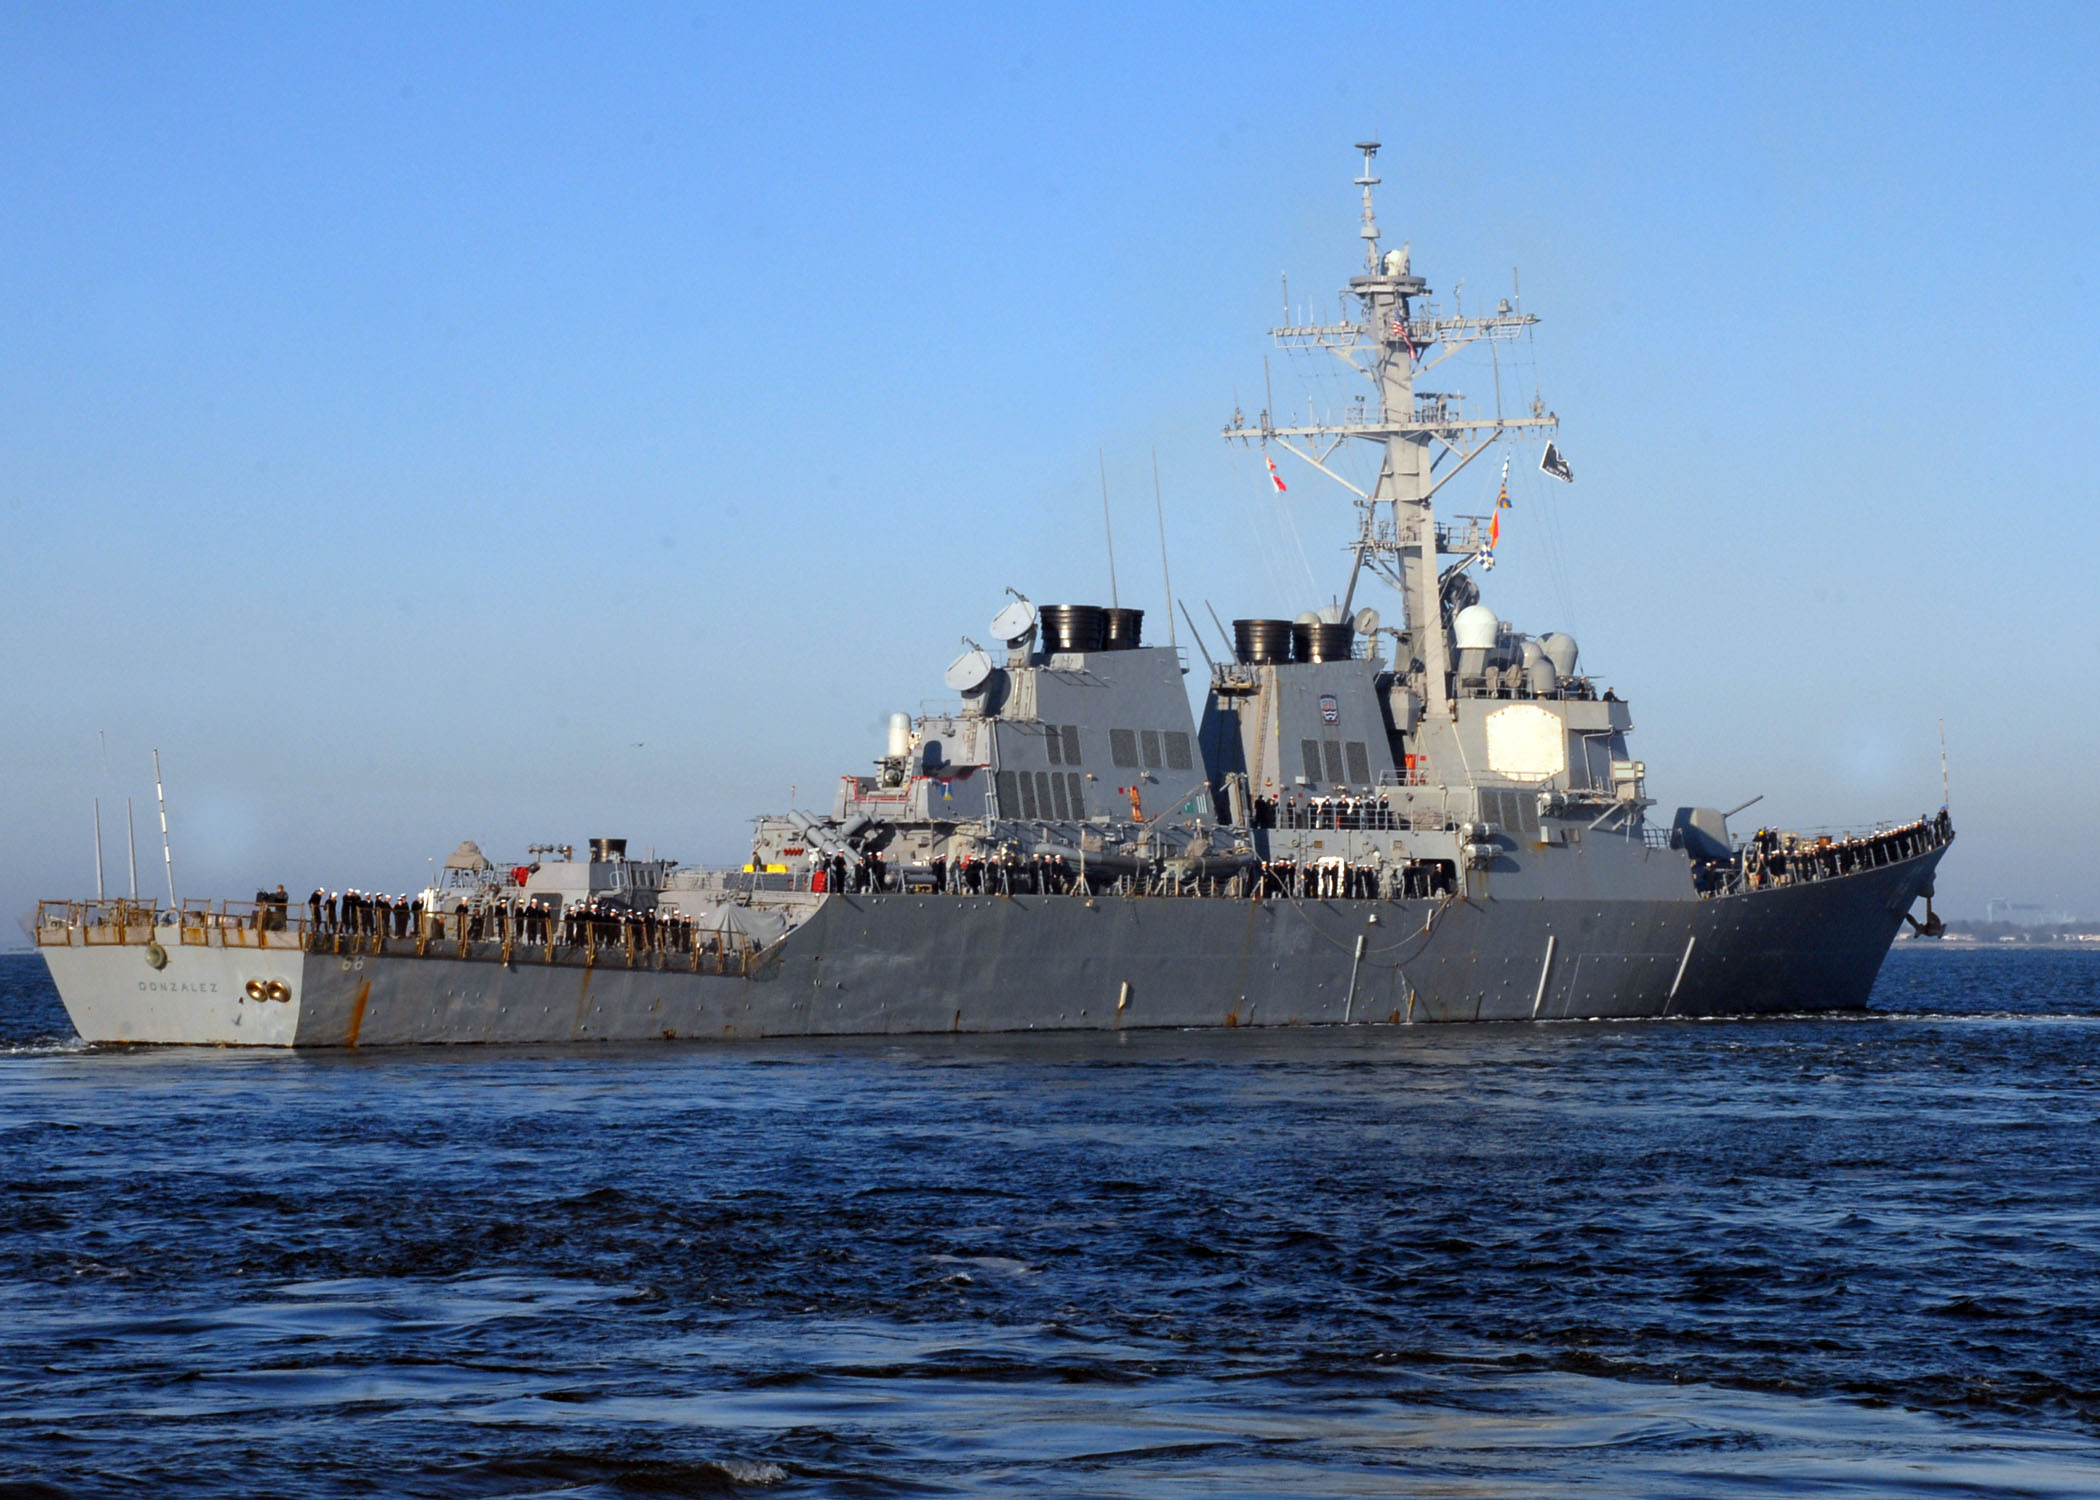 USS GONZALAZ DDG-66 am 04.01.2013 in NorfolkBild: U.S. Navy